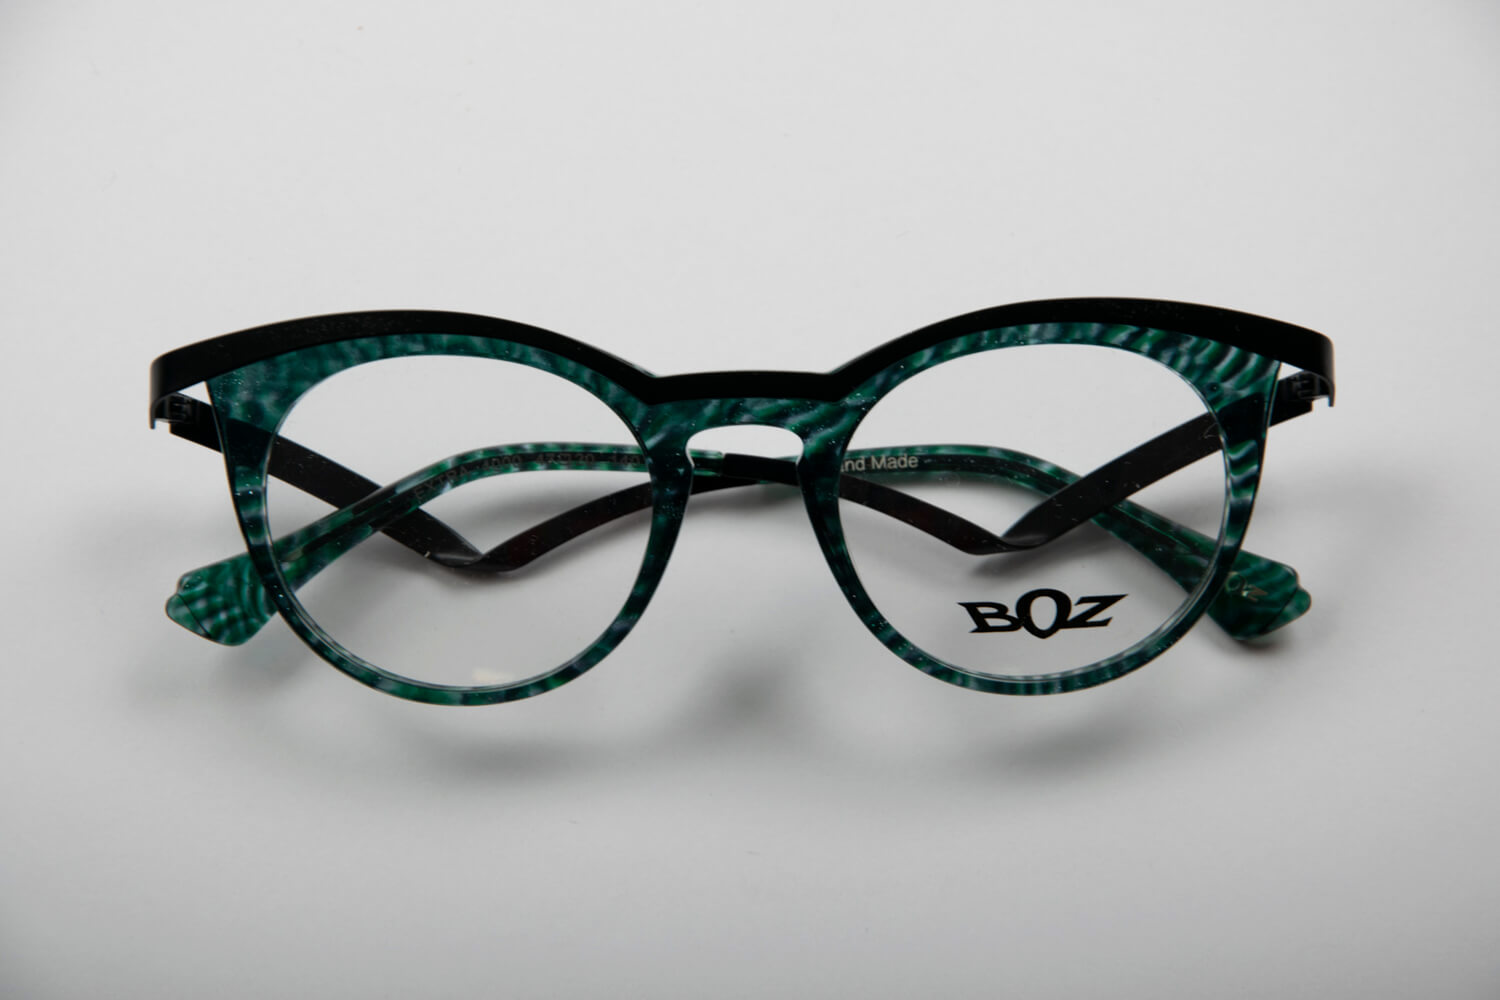 Boz Eyewear | France | Verde Acqua - OTTICA SICOLI